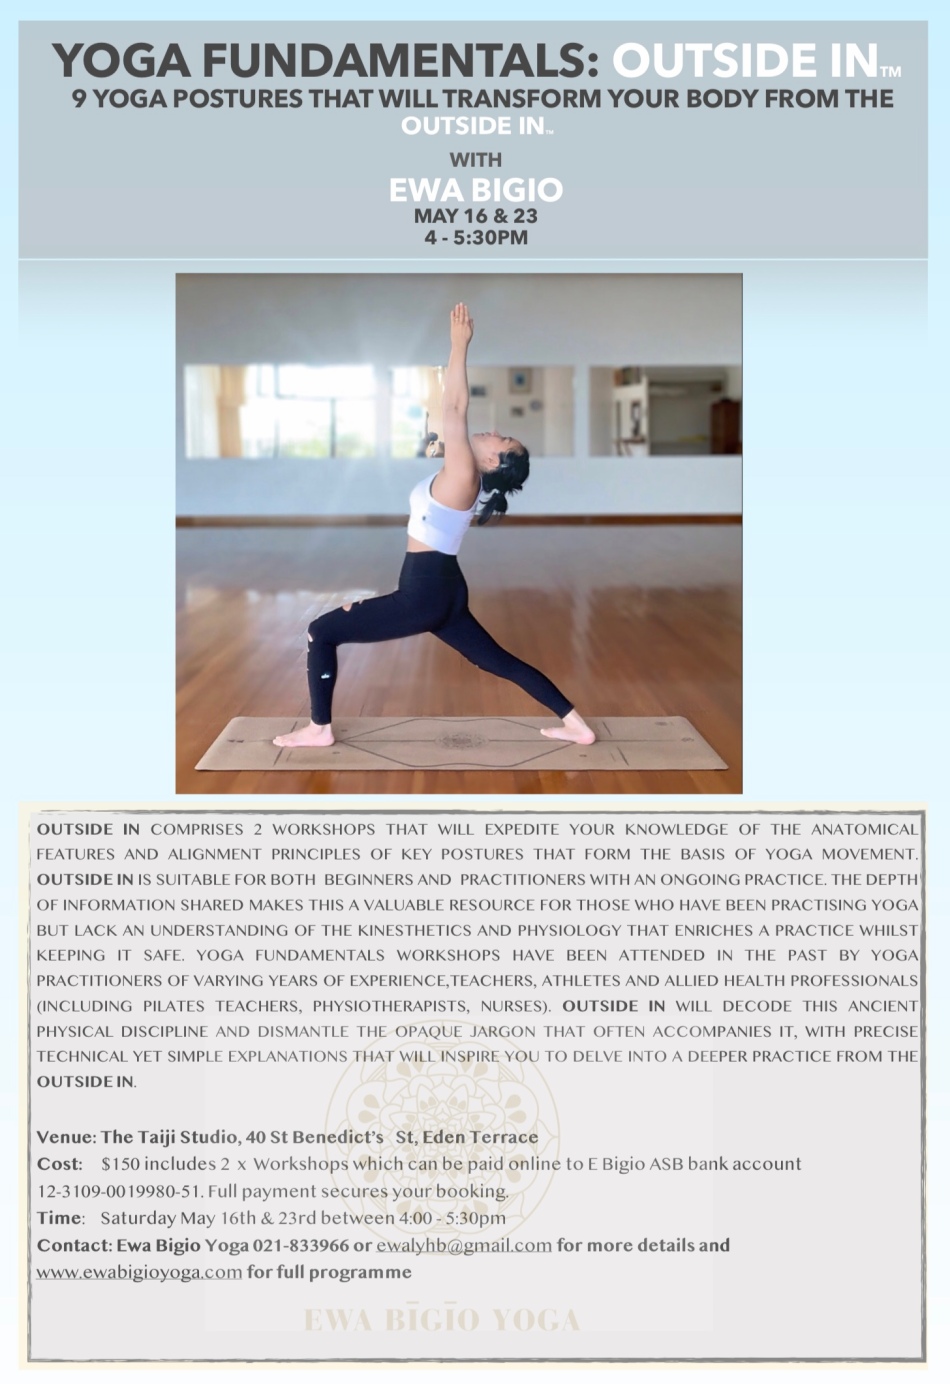 Yoga Fundamentals Course: The Keys to Yoga with Ewa Bigio – EWA BIGIO YOGA